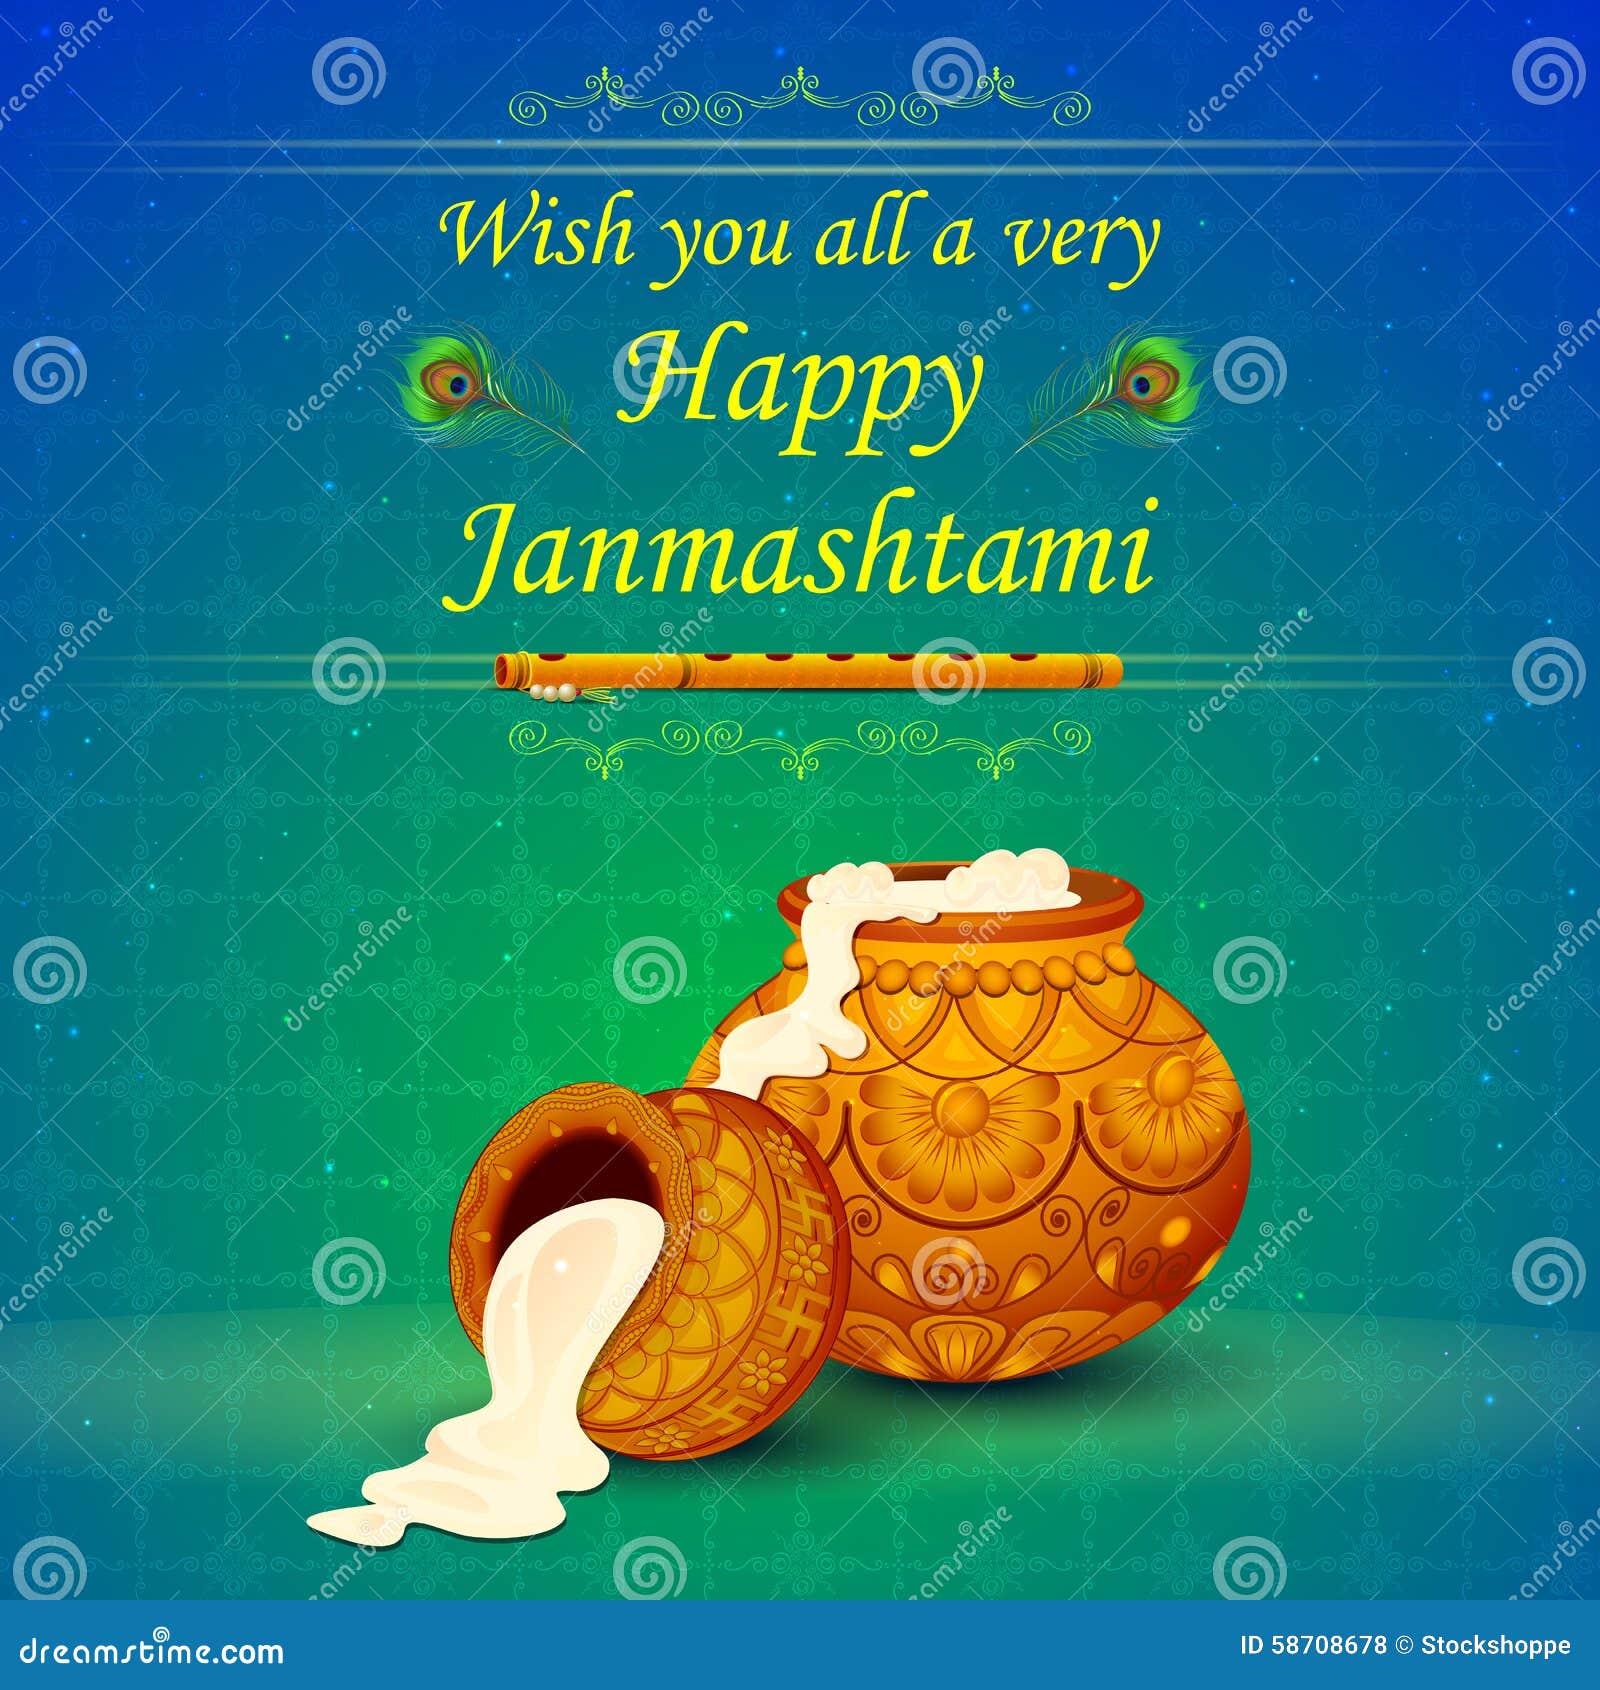 Lord Krishna Janmashtami Images Hd  1600x1024 Wallpaper  teahubio